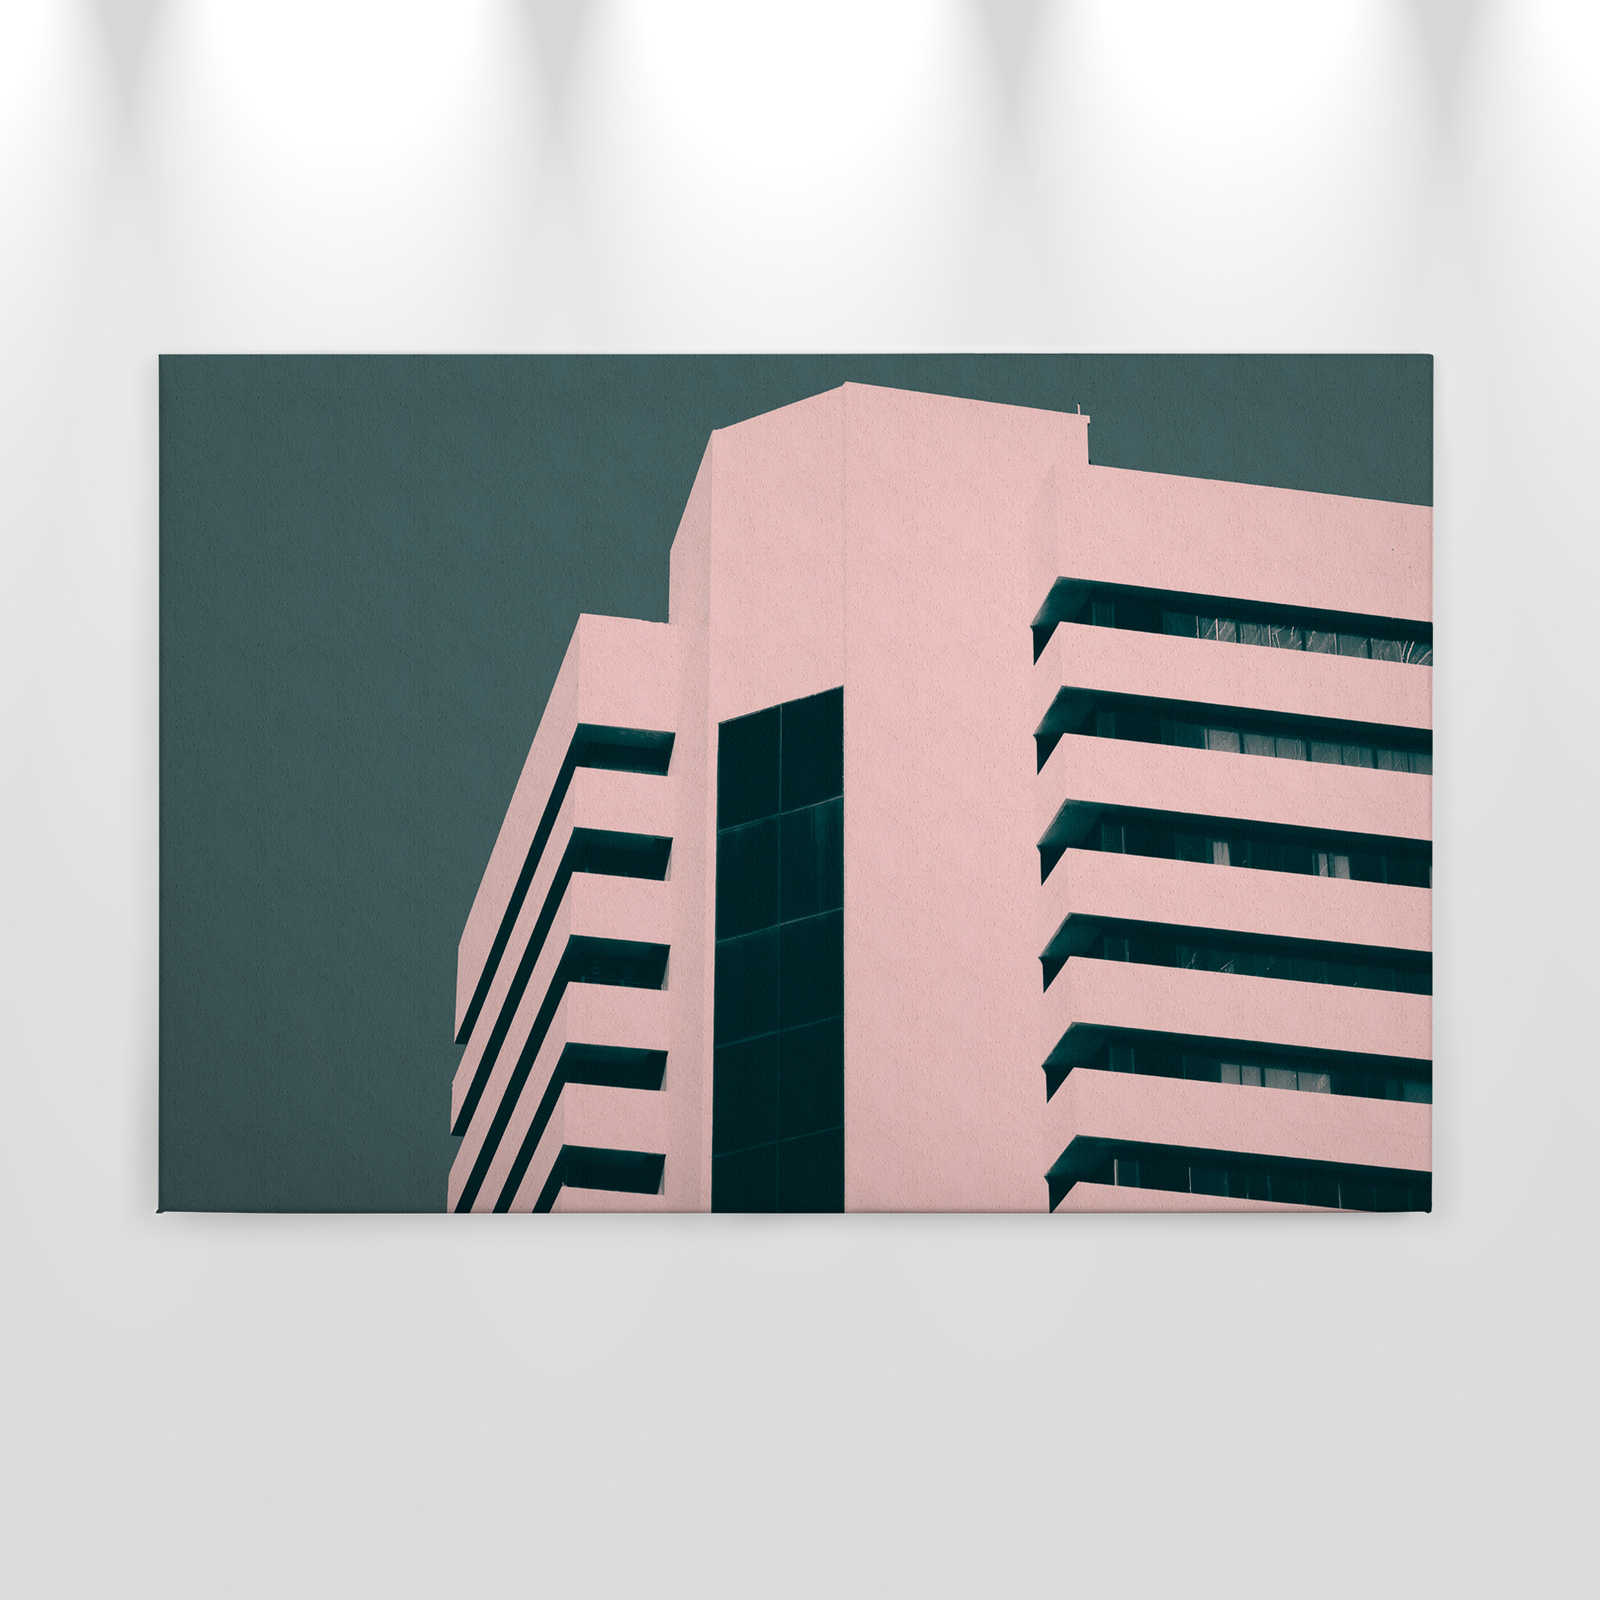             Rascacielos 2 - Pintura en lienzo con arquitectura urbana moderna - Estructura en bruto - 0,90 m x 0,60 m
        